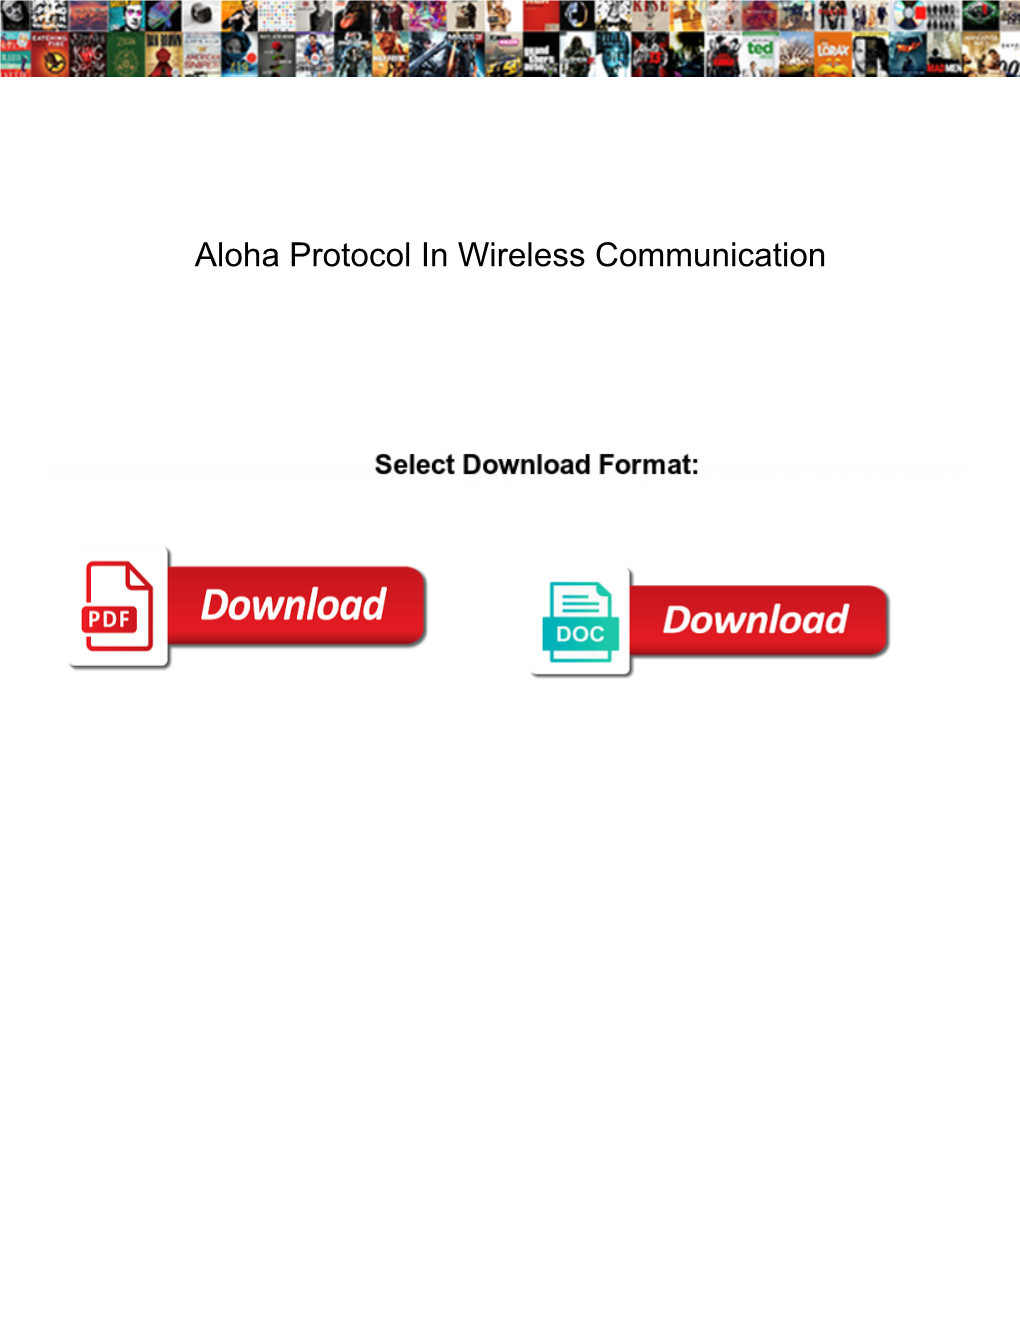 Aloha Protocol in Wireless Communication